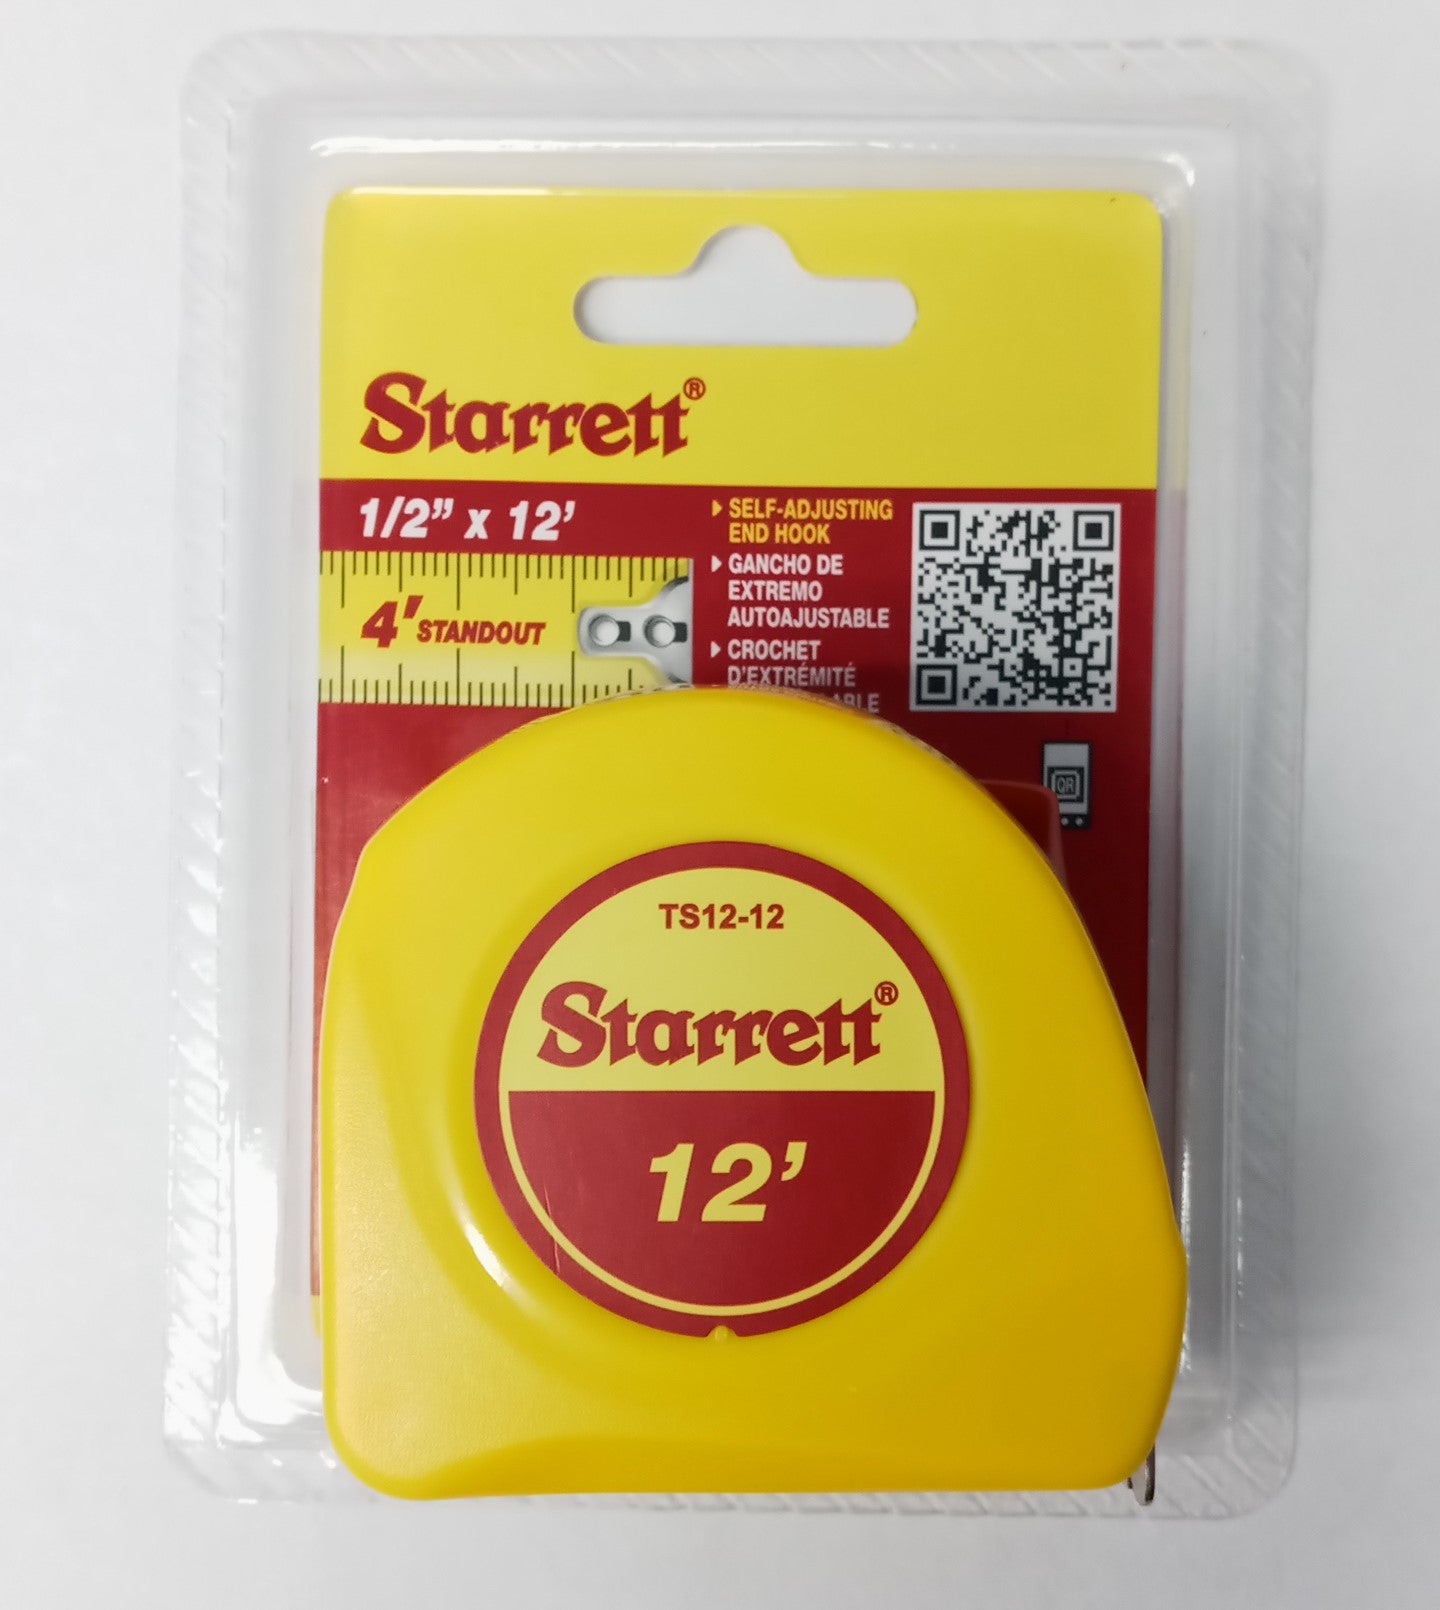 Starrett KTS12-12-N 12" Tape Measure